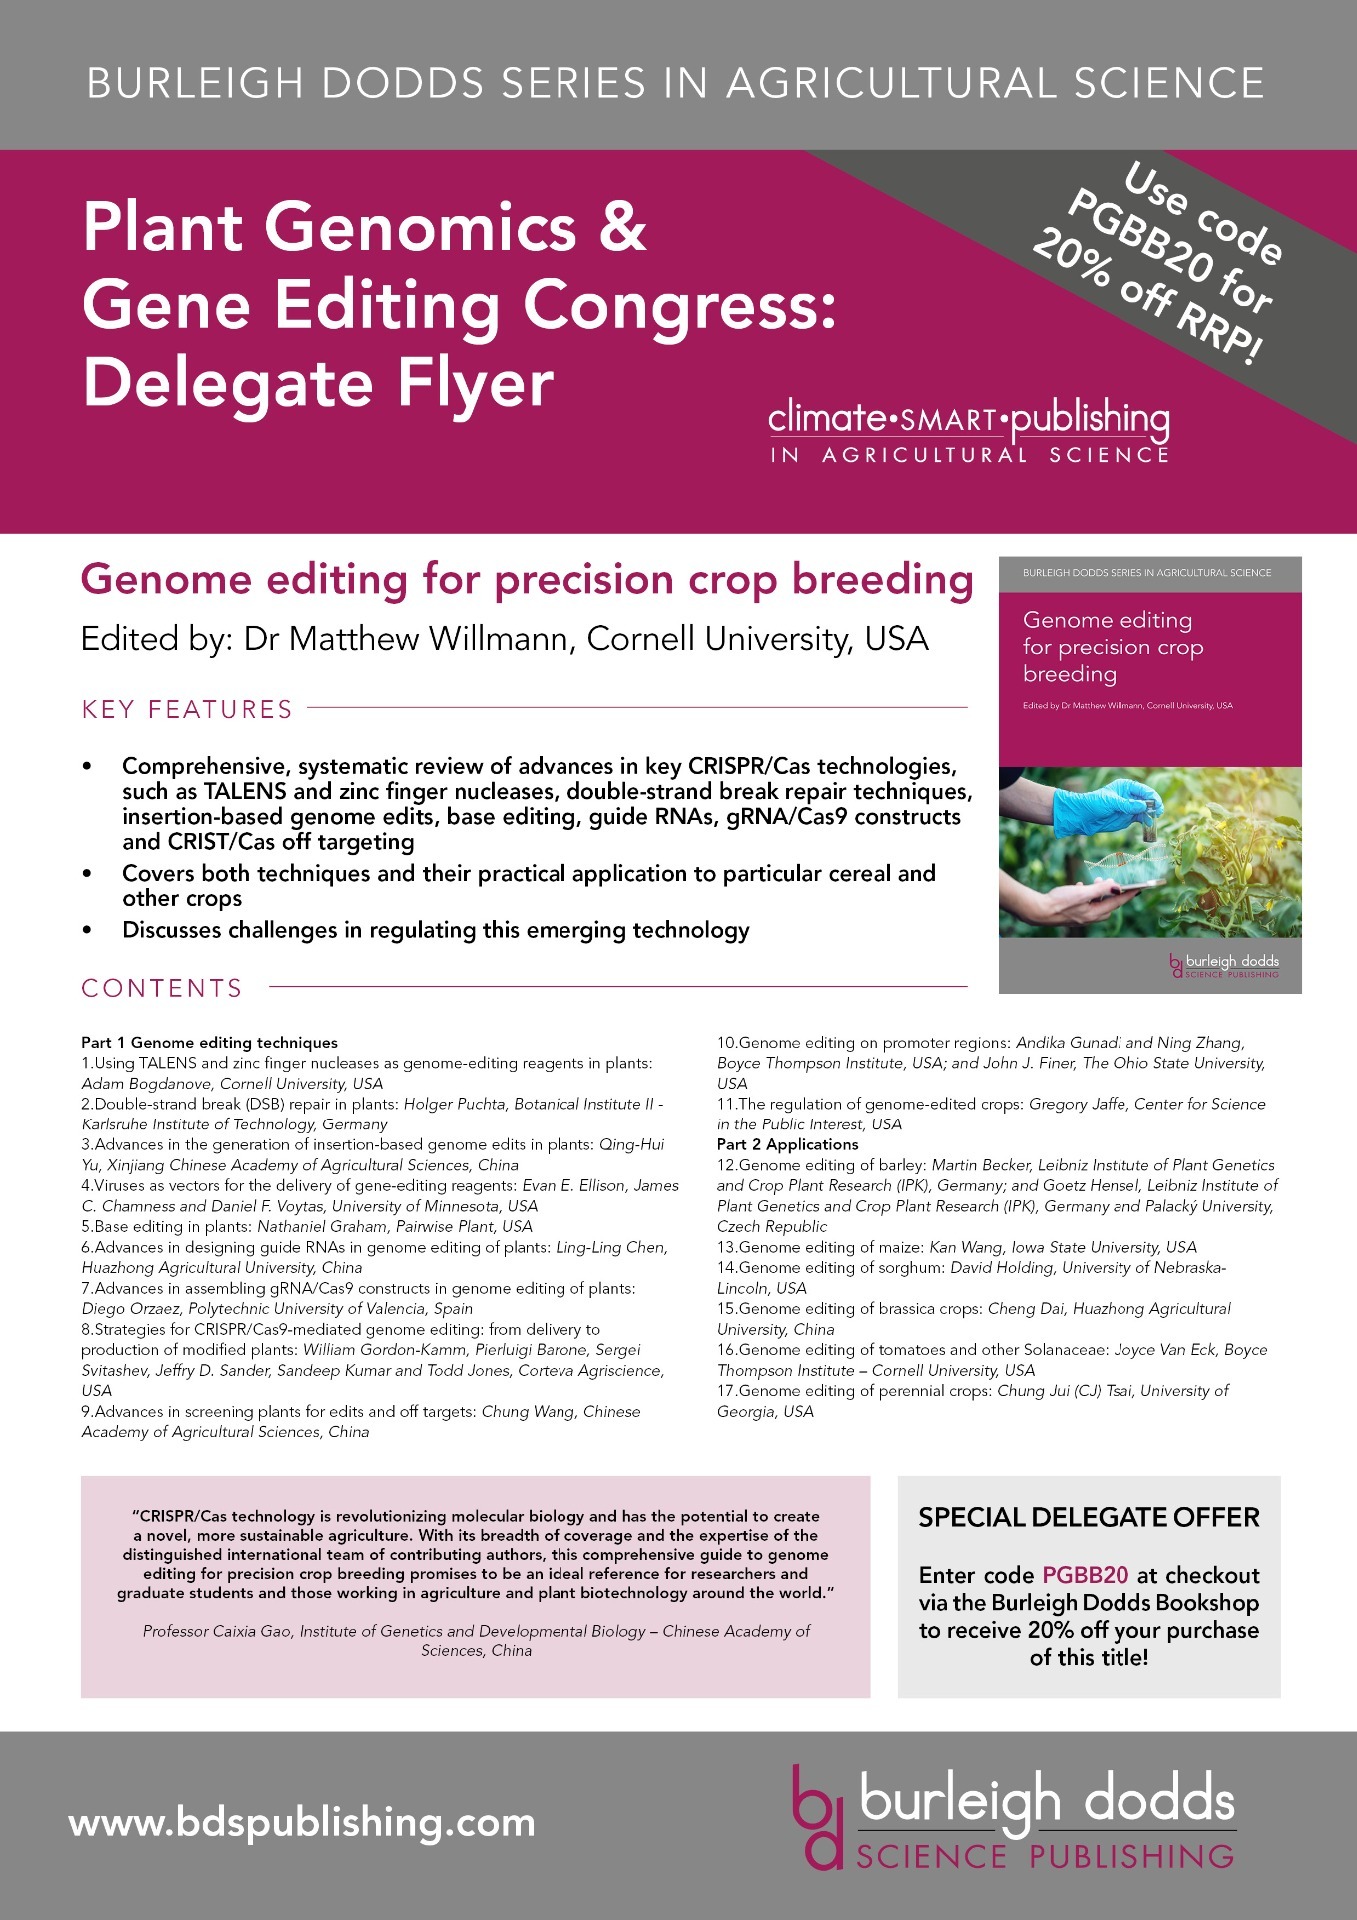 Plant Genomicsa & Gene Editing Congress Delegate Flyer